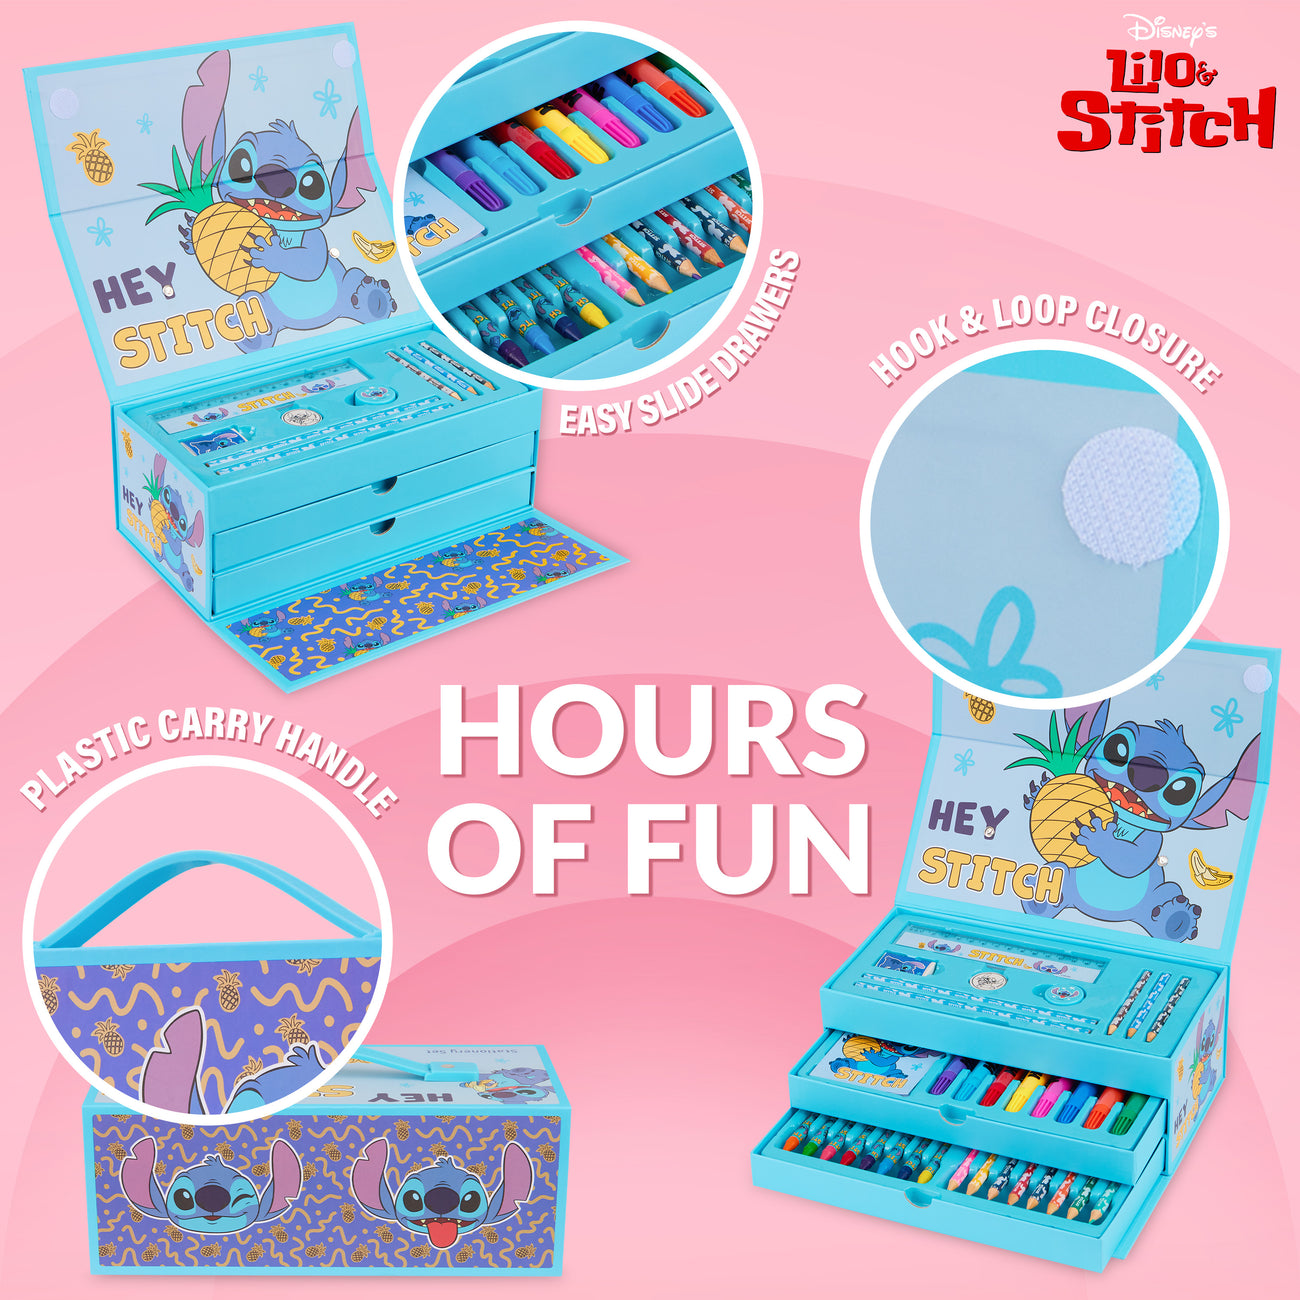 Disney Stitch Colouring stationery case